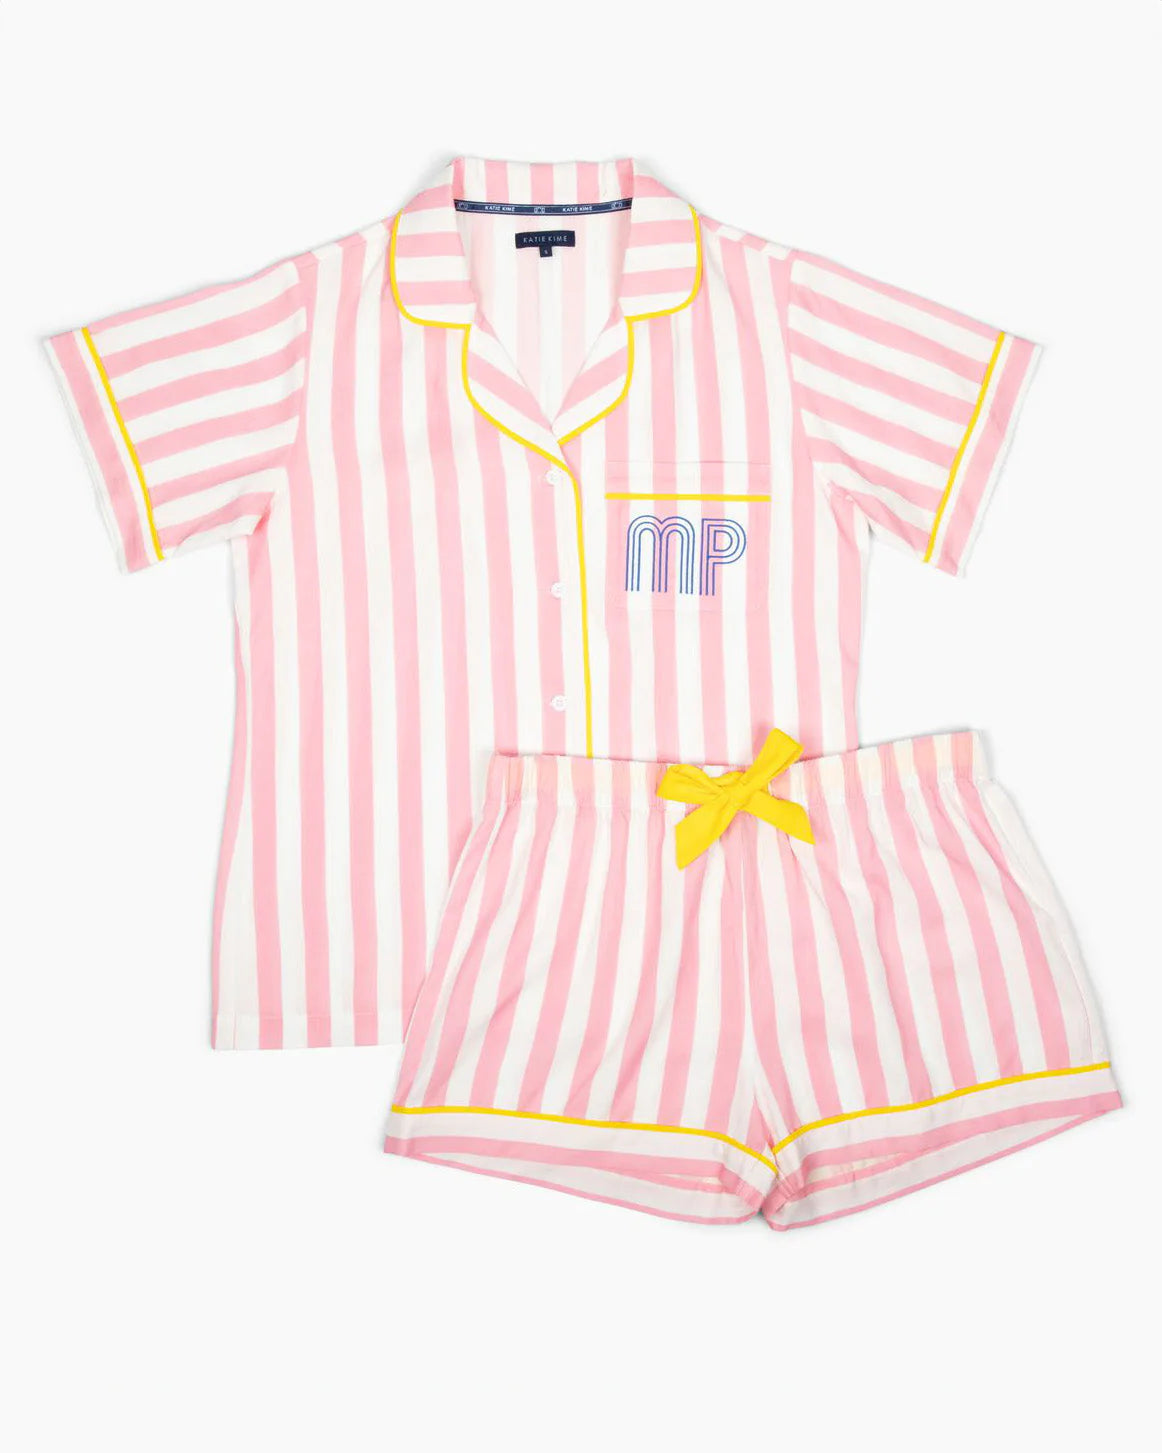 Retro Striped Pajama Short Set